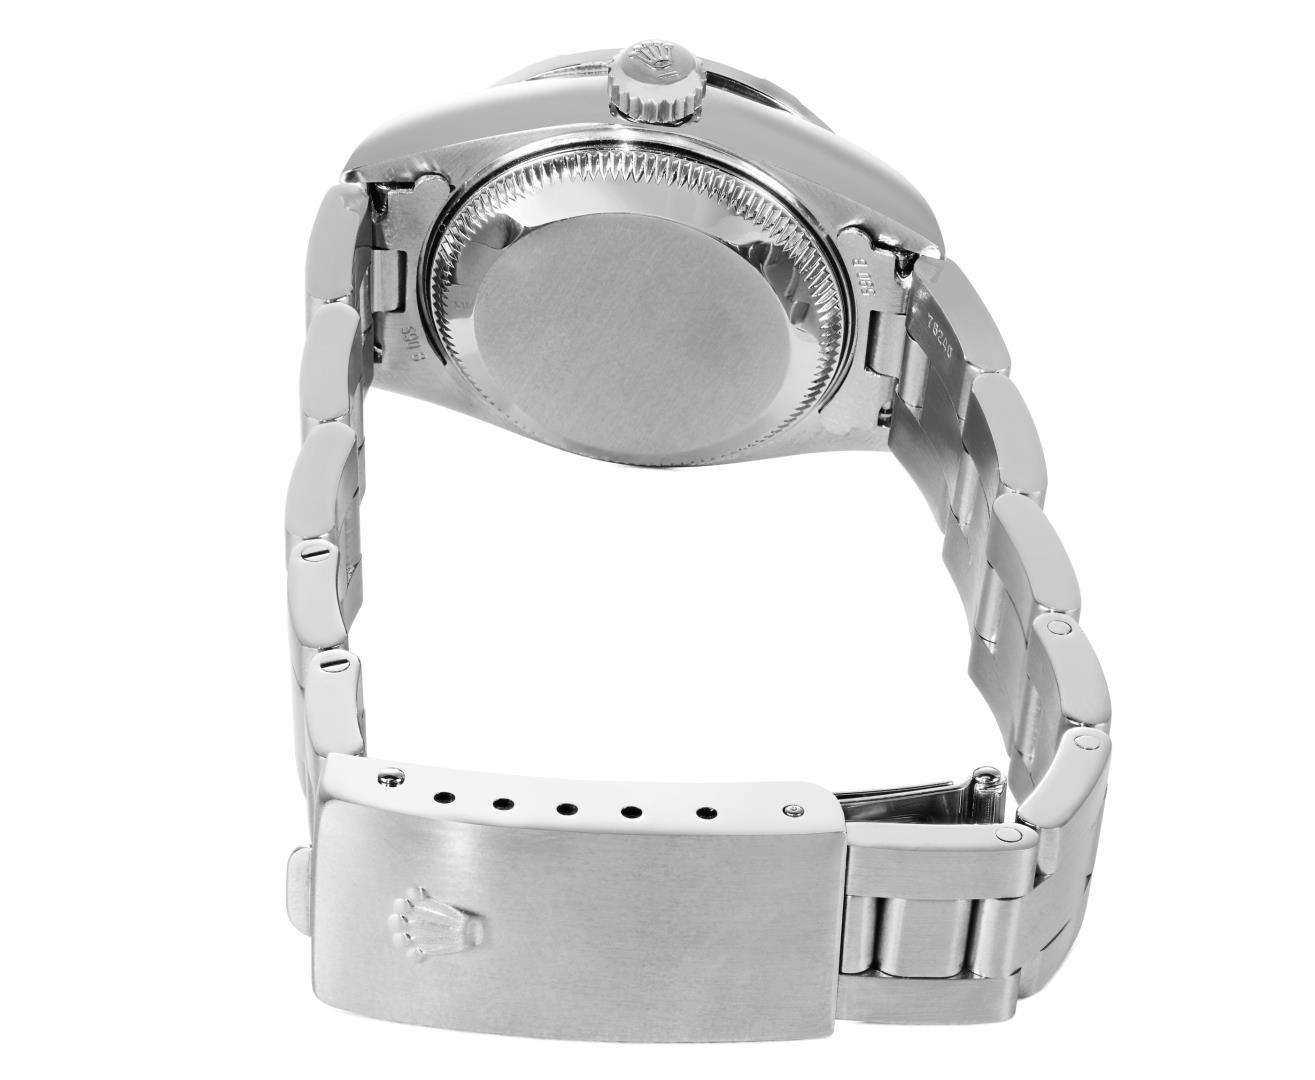 Rolex Ladies Stainless Steel White Arabic Diamond Date Wristwatch With Rolex Box